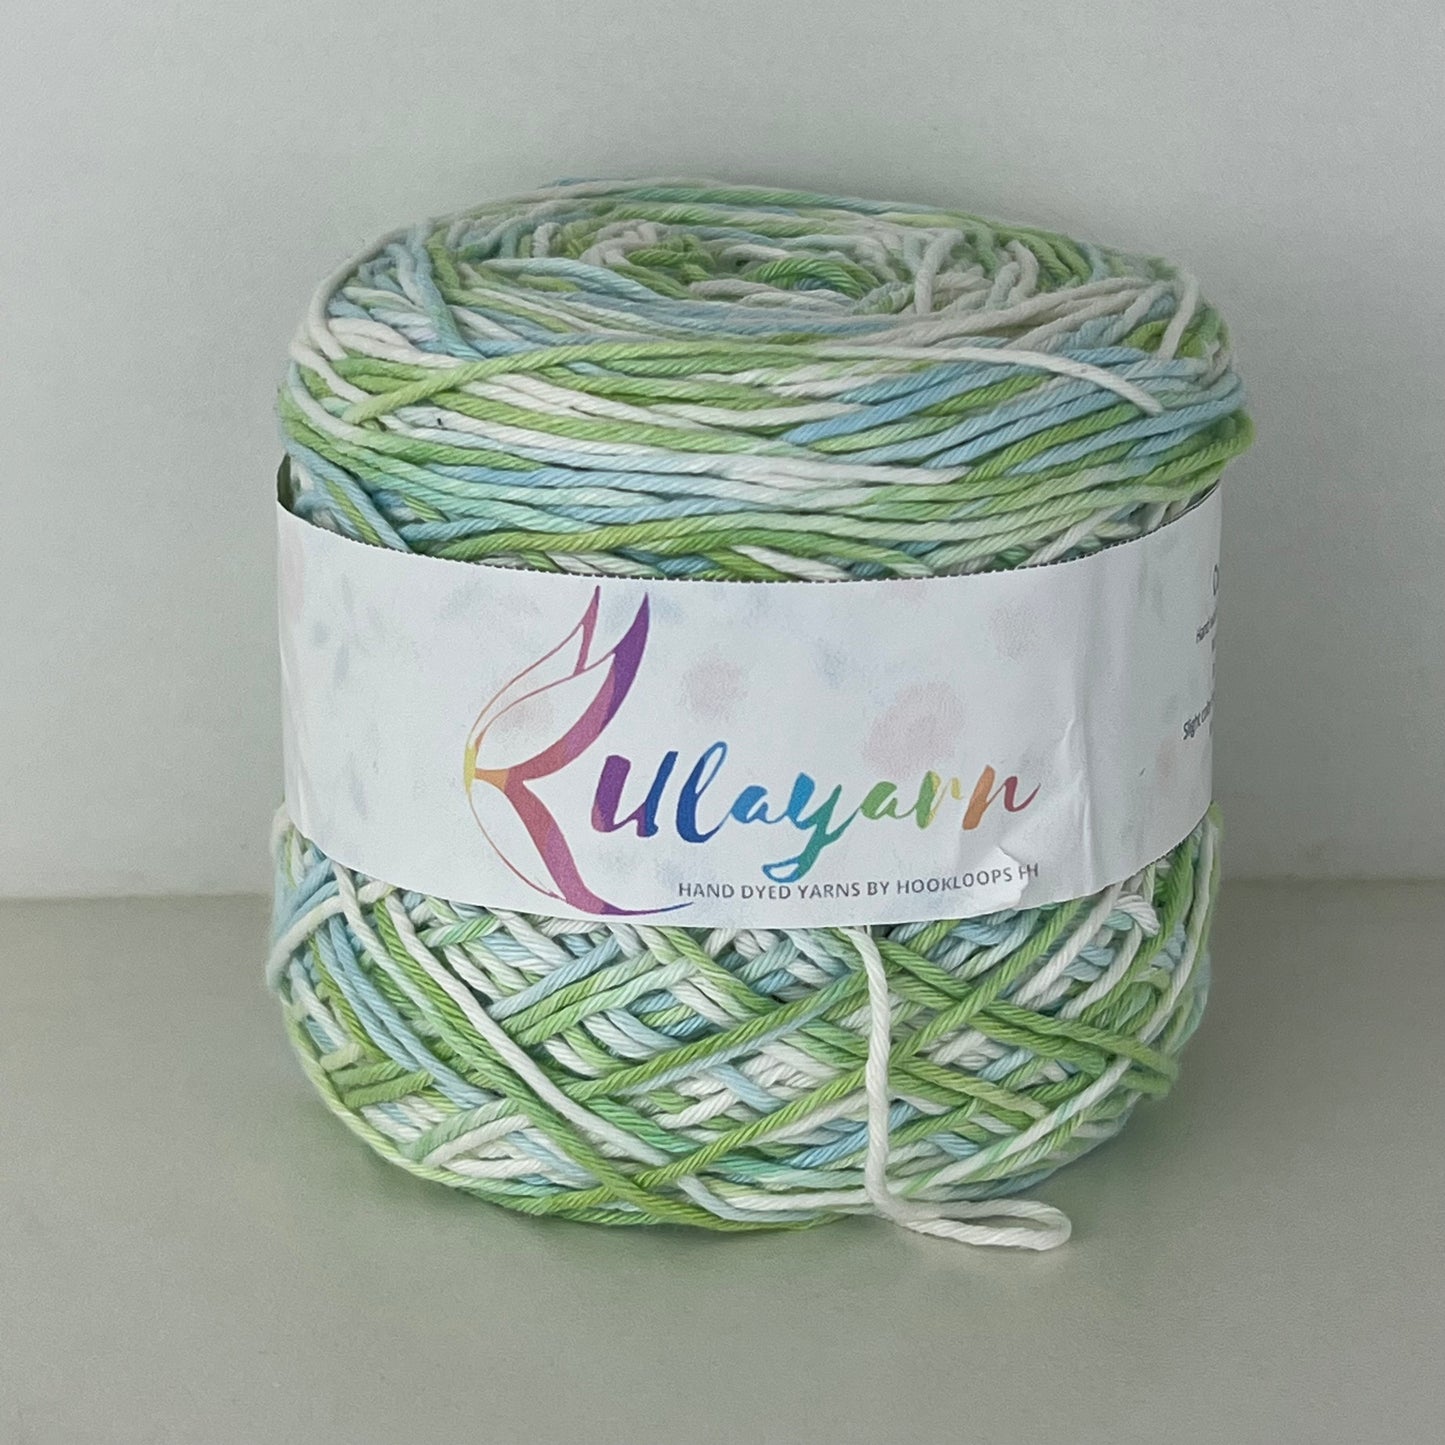 Hand-dyed 8ply Cotton Yarns by @kulayarn.ph